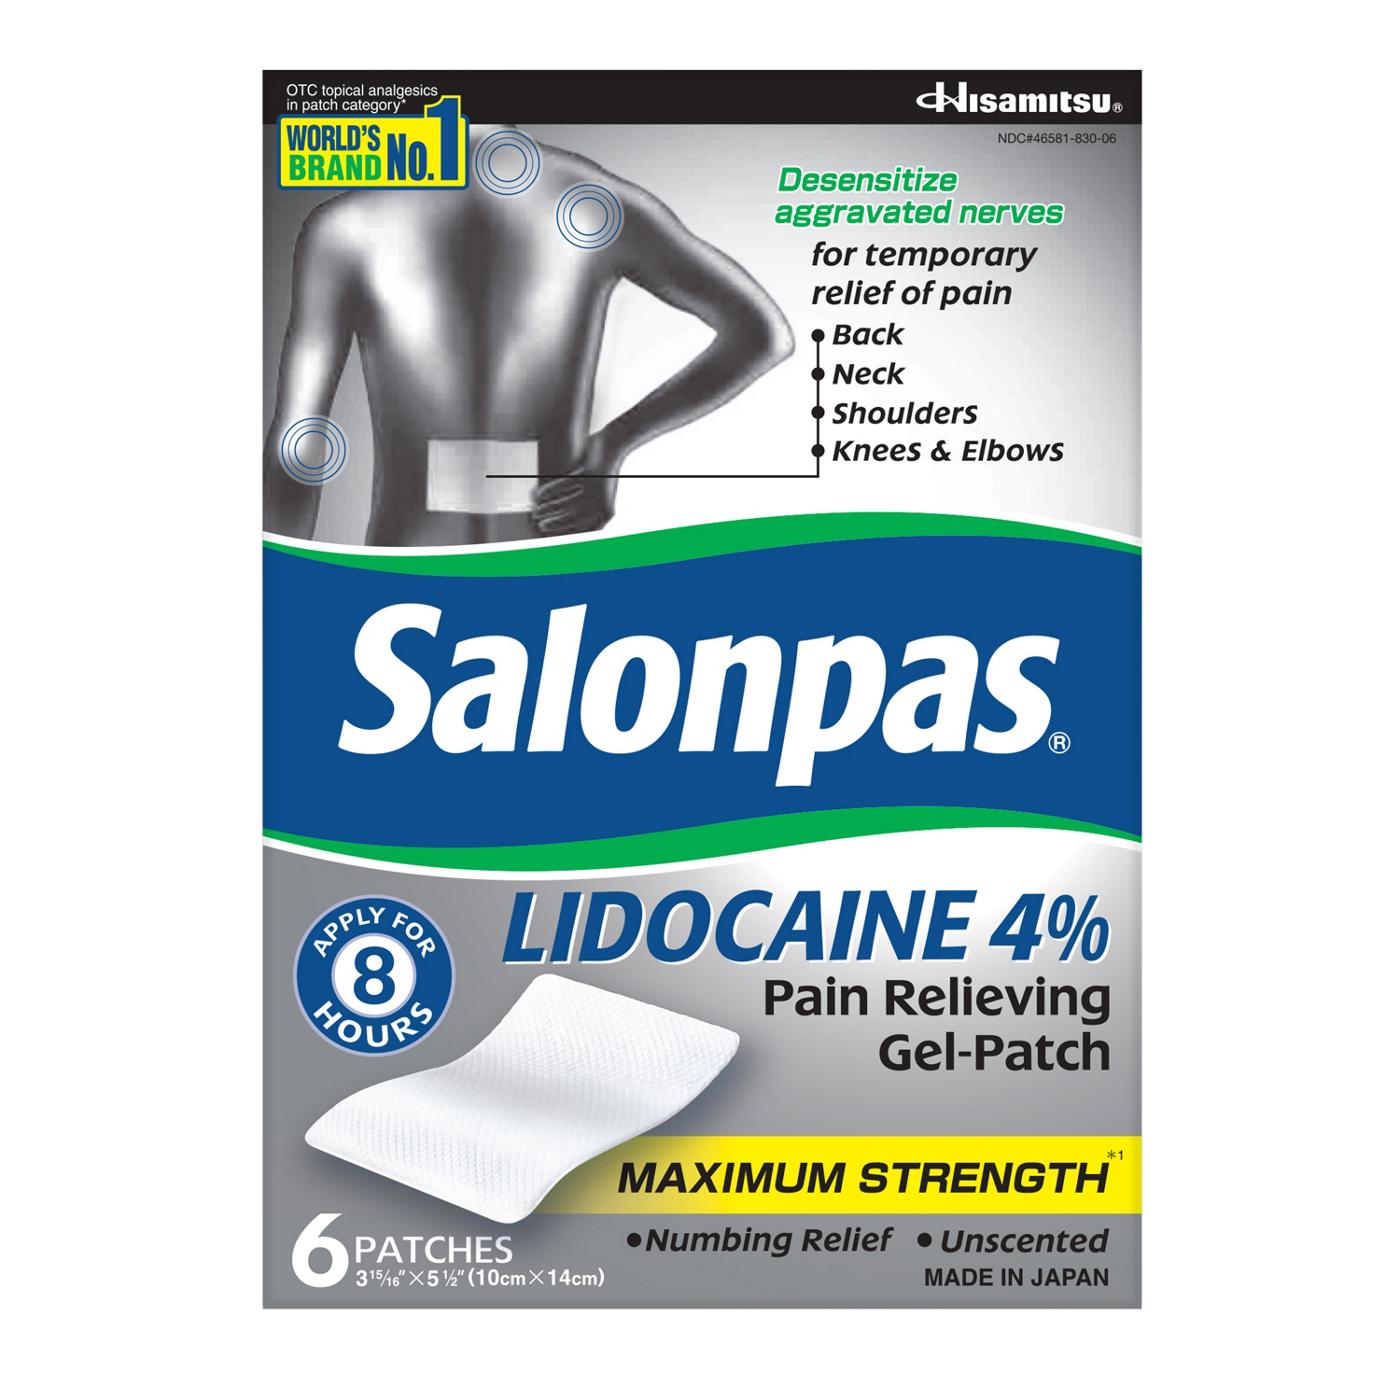 Salonpas Lidocaine 4% Pain Relieving Gel-patch; image 1 of 6